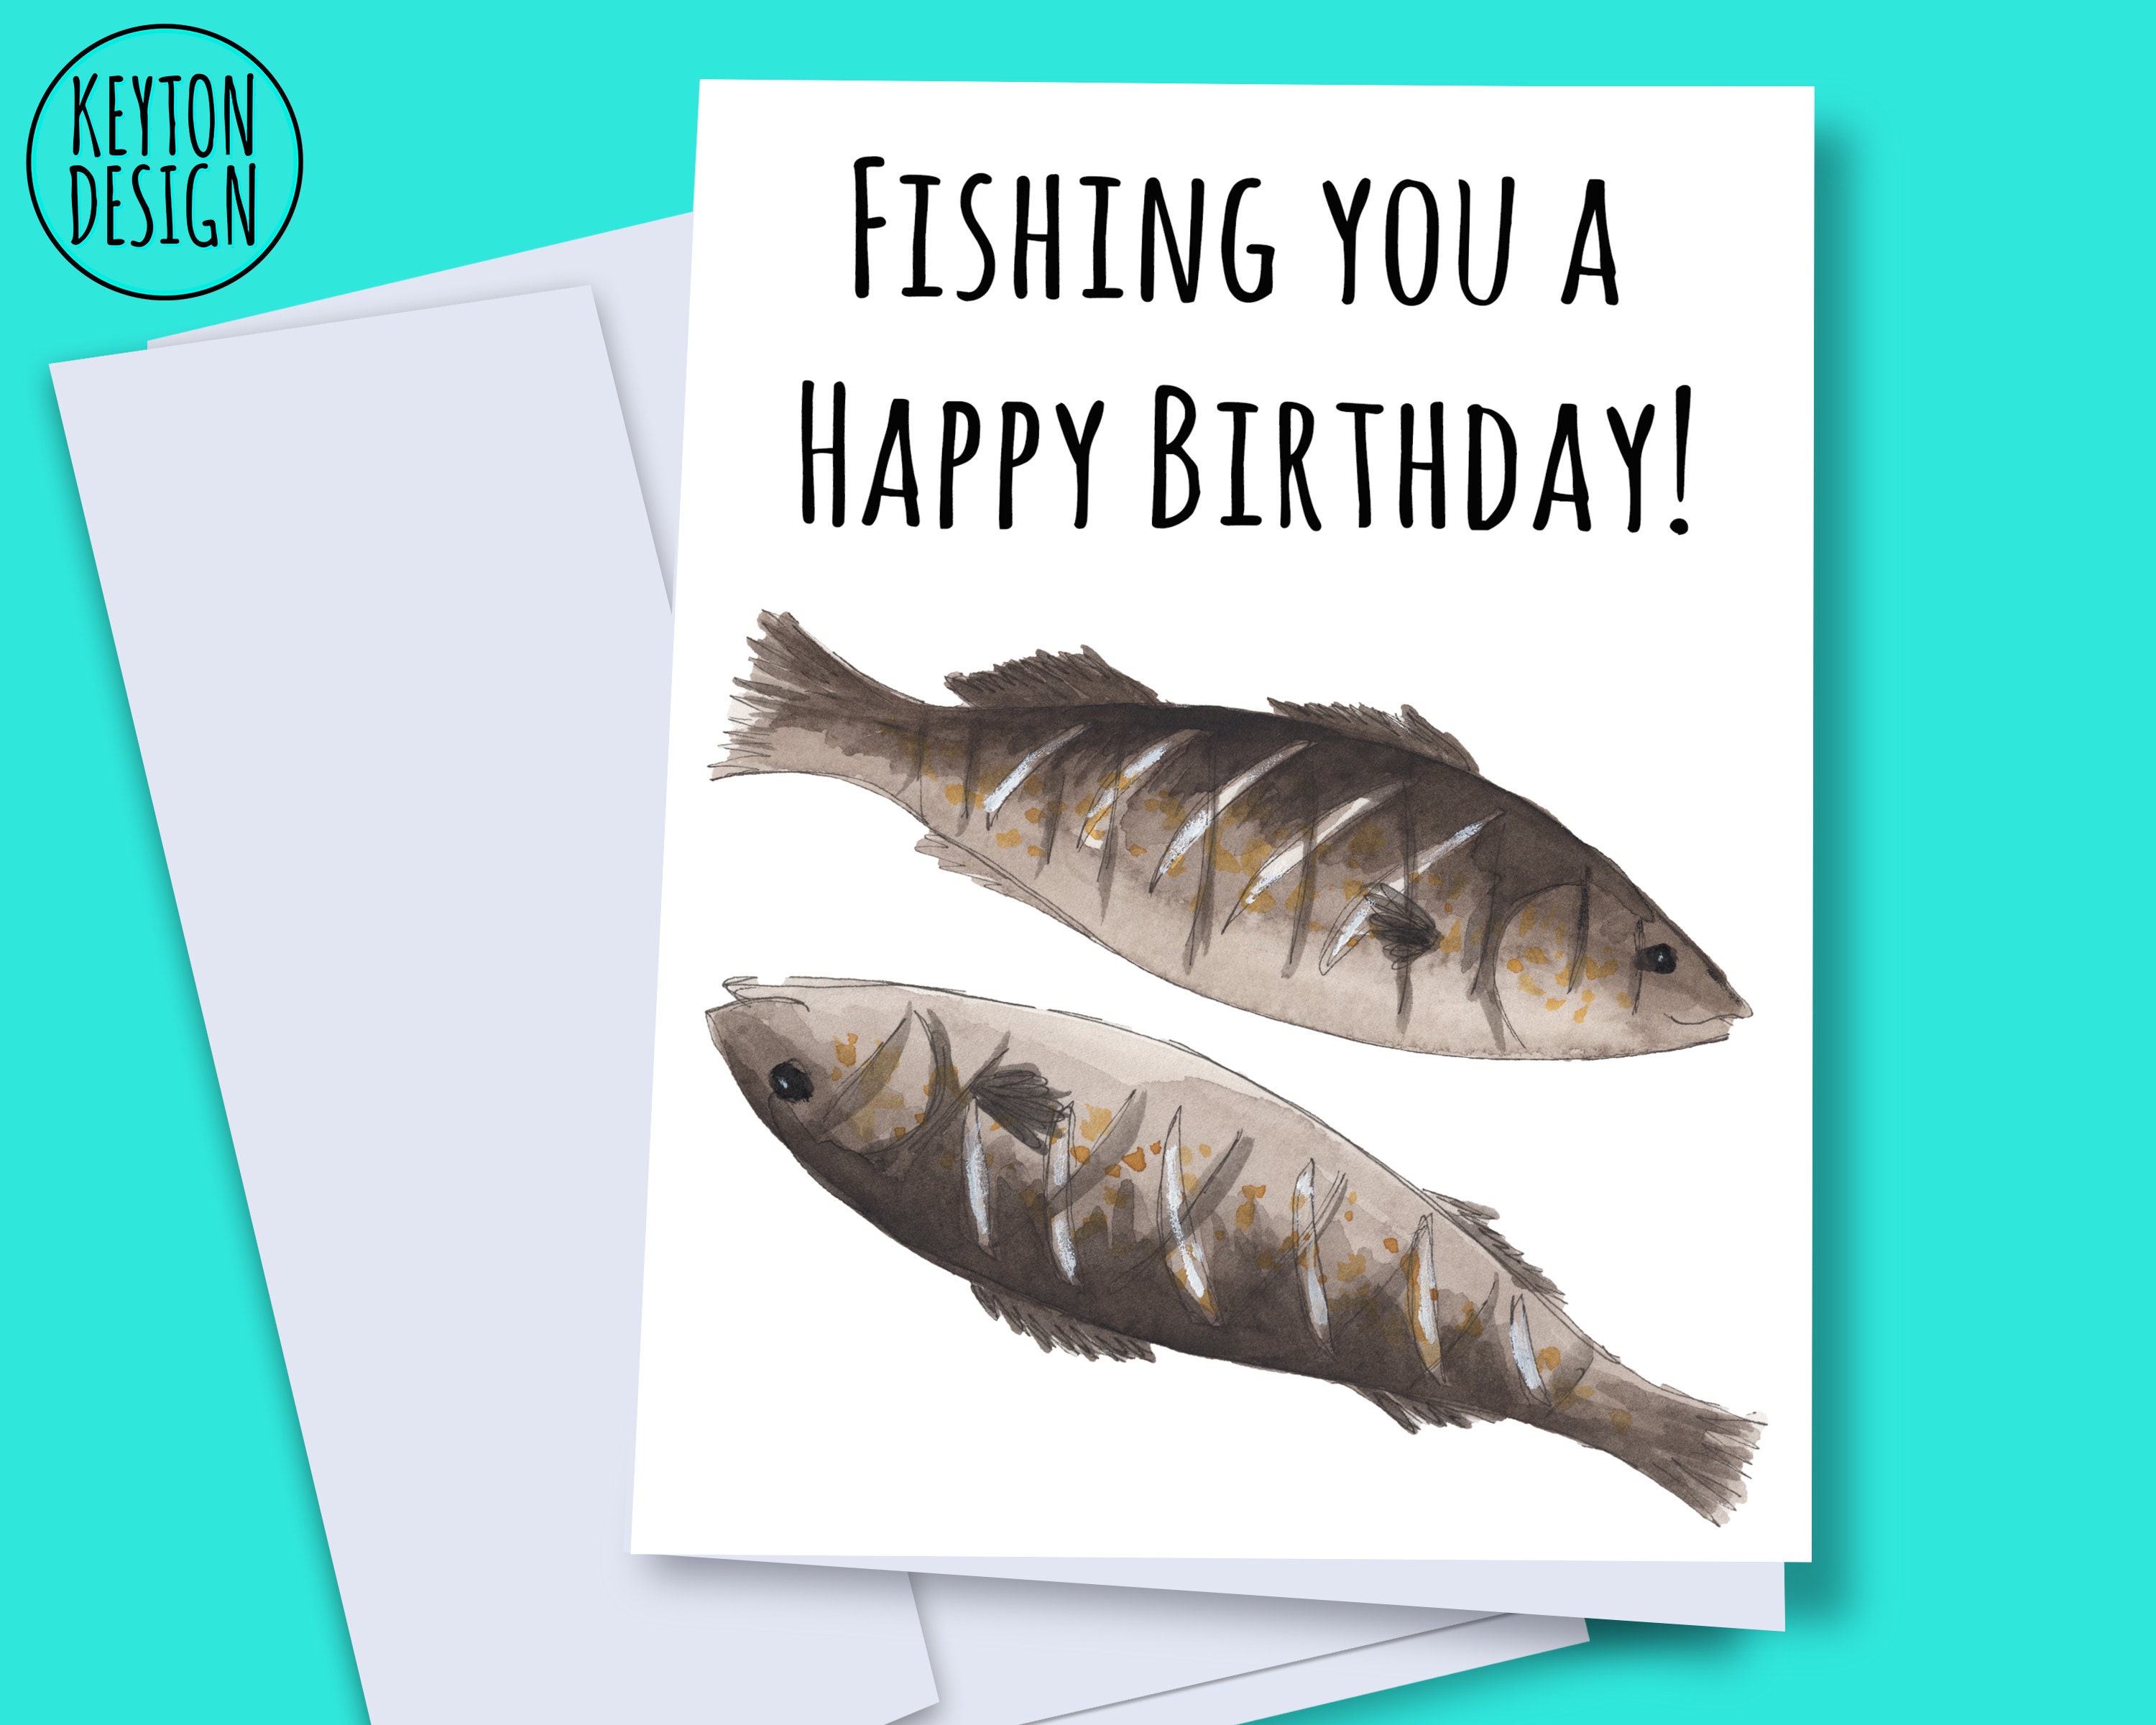  NTVShop Cod Fish Birthday Card - Funny Birthday Card - Got You  A Birthday - Funny Greeting Card - Gift For Dad Husband : Office Products